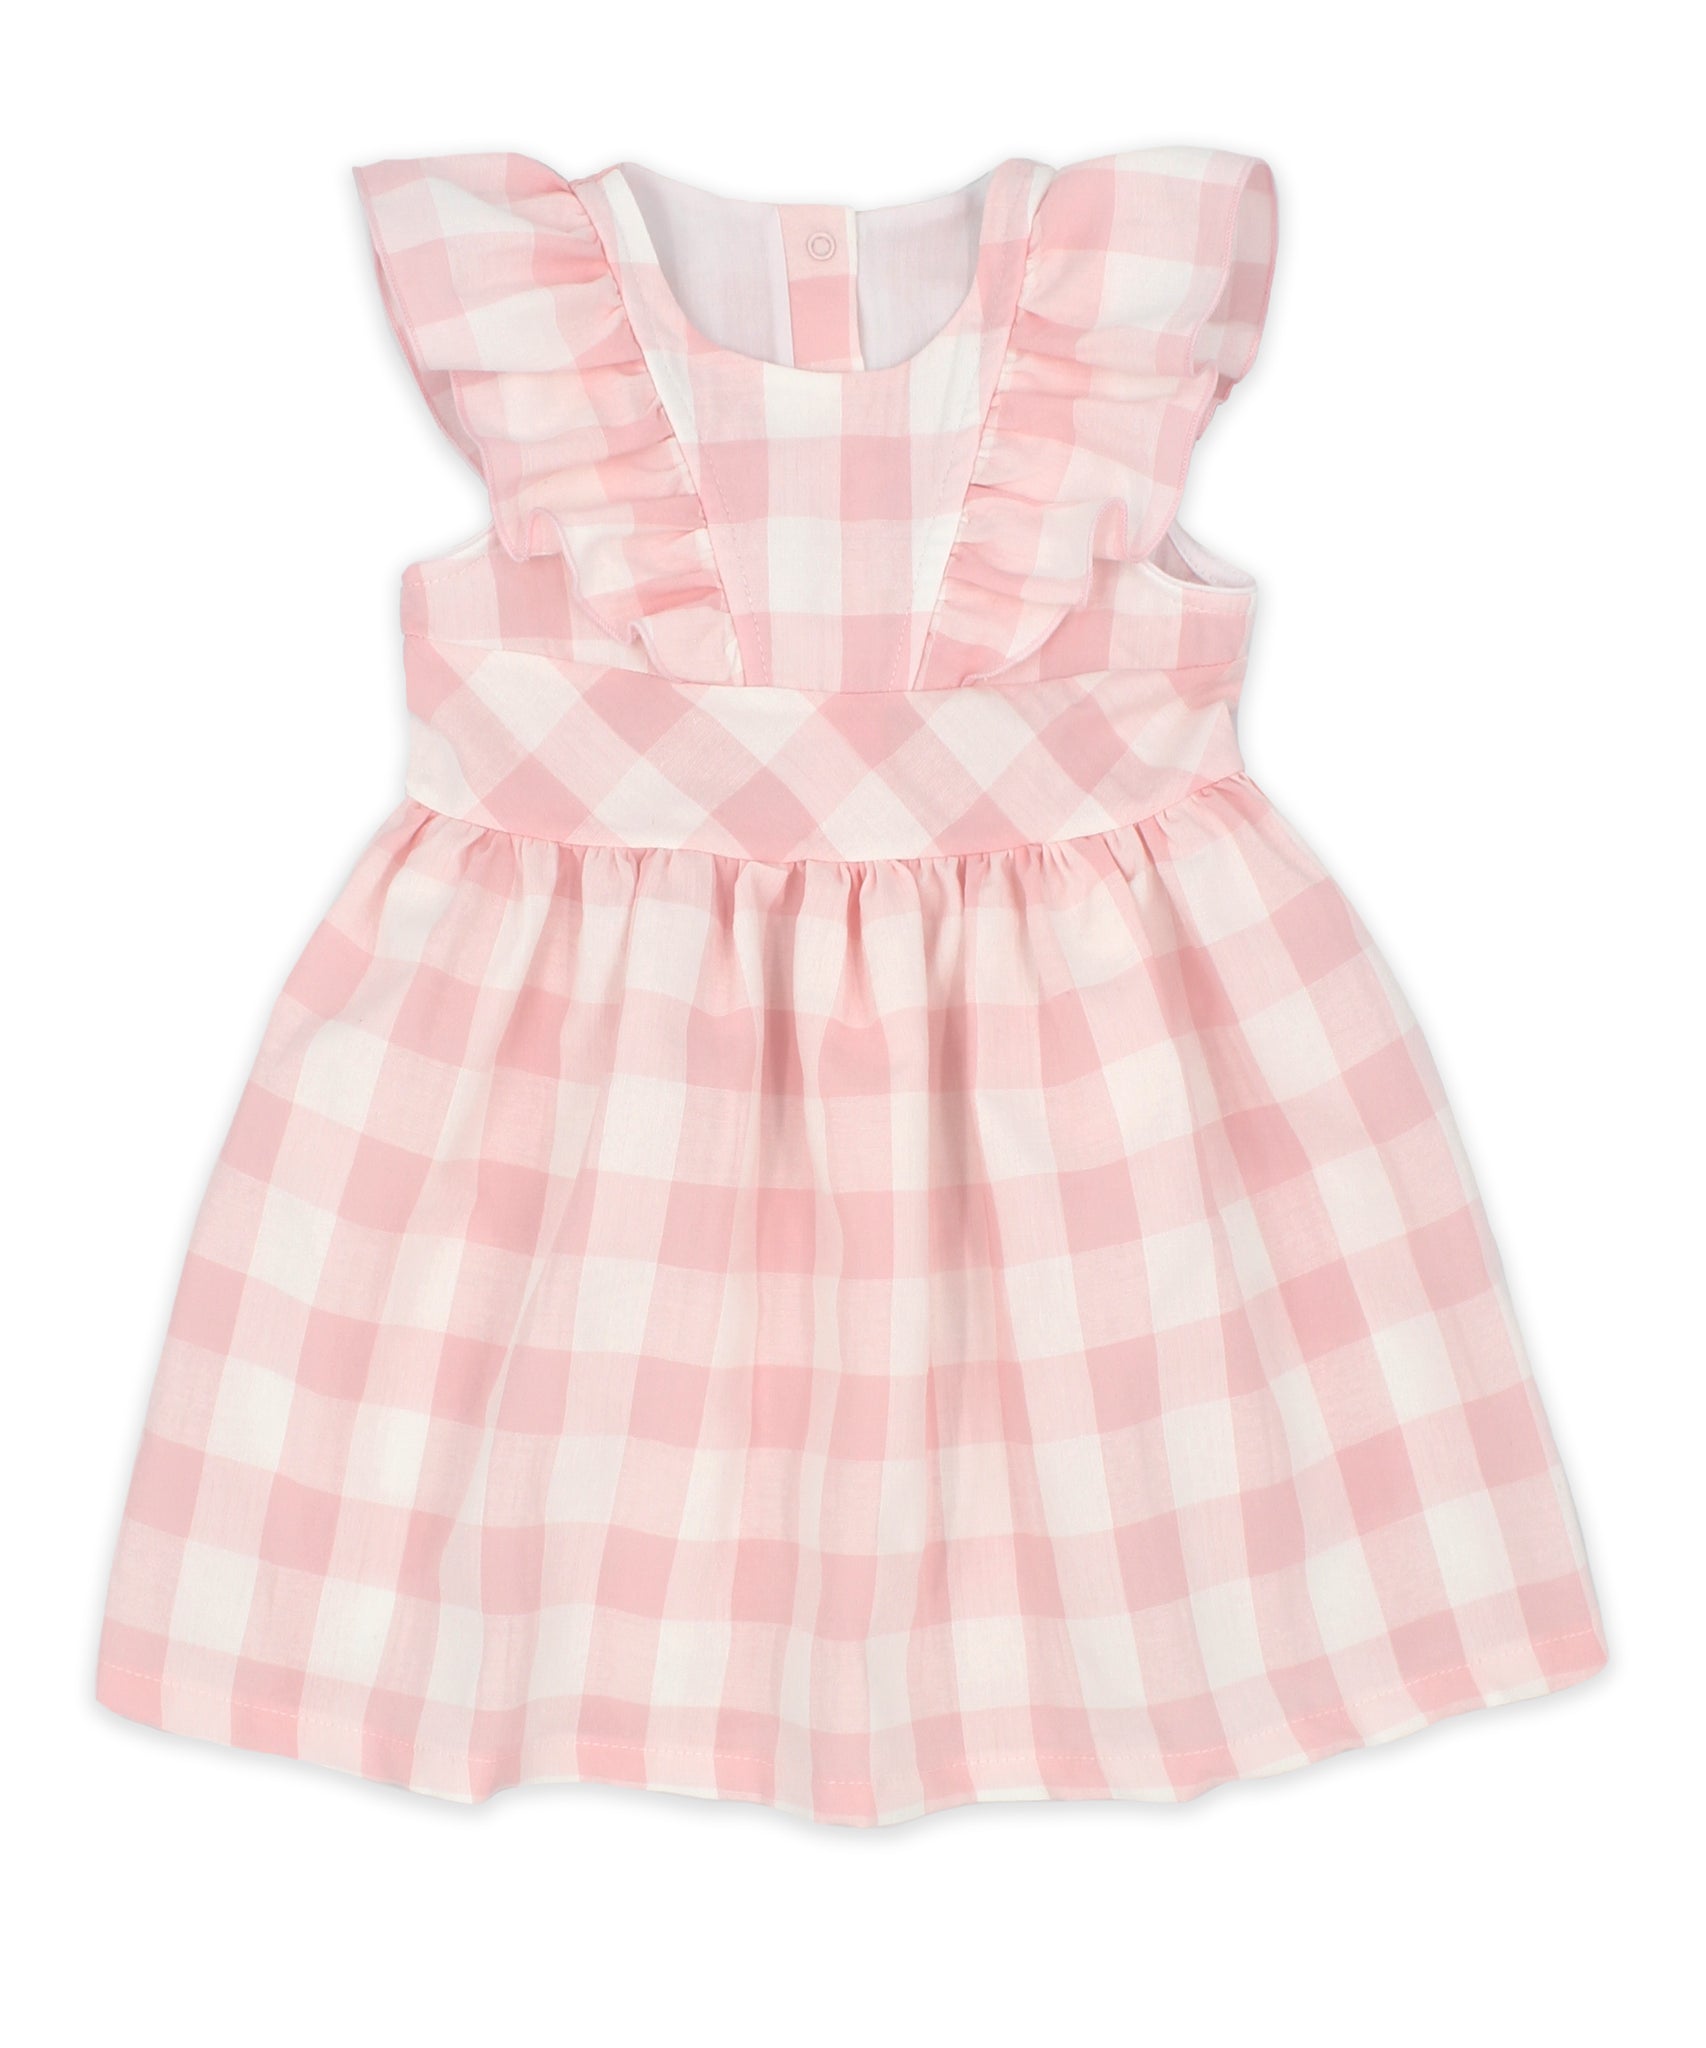 Rapife Pink & White Check Dress